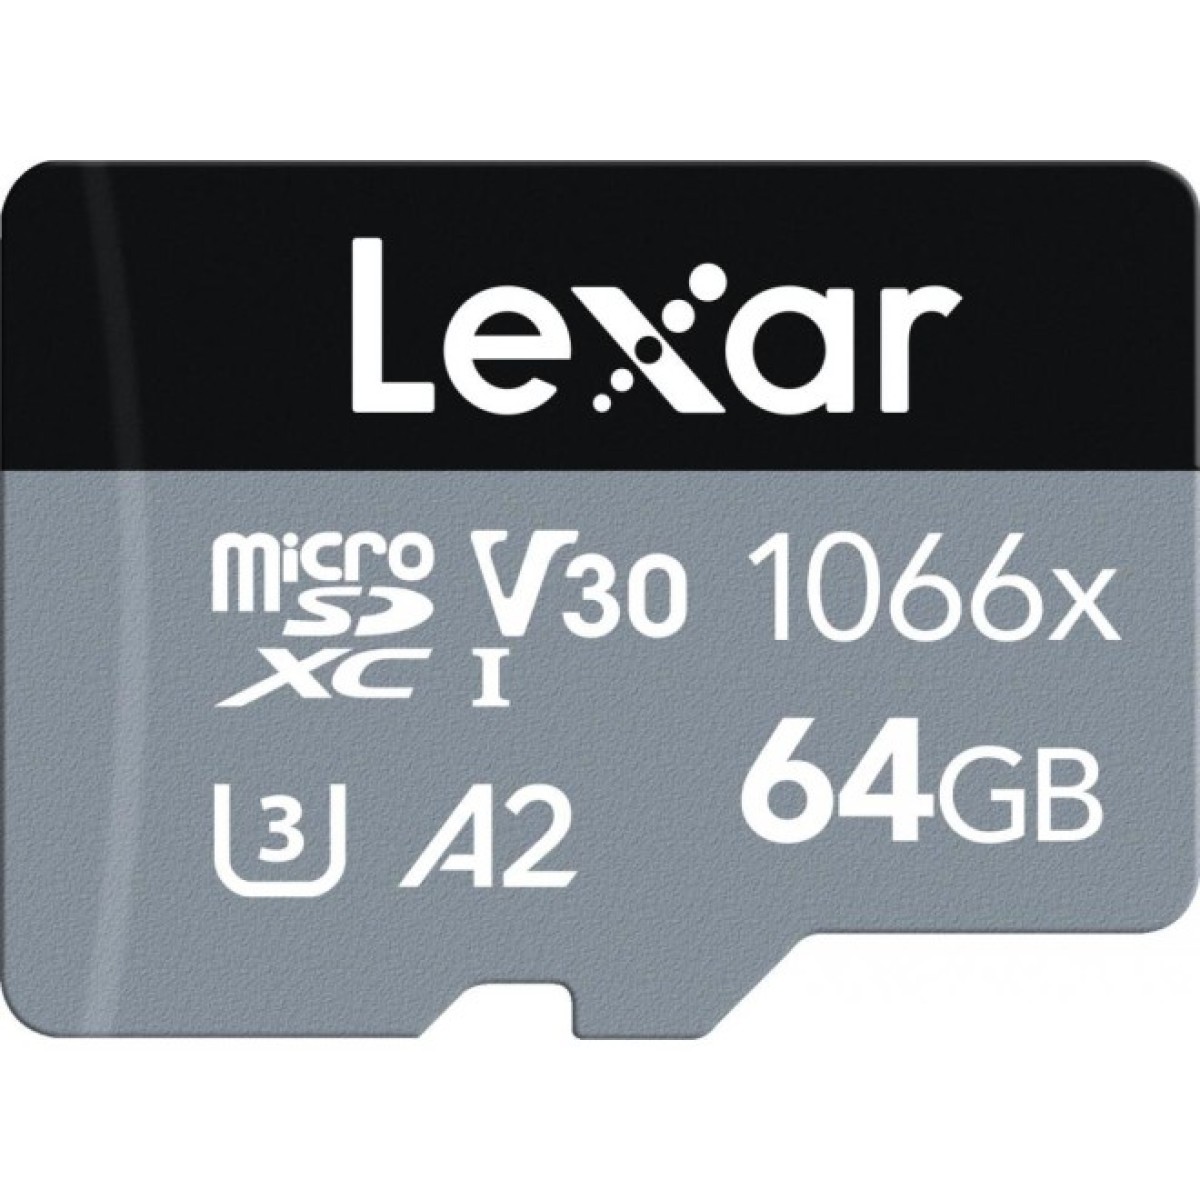 Карта памяти Lexar 64GB microSDXC class 10 UHS-I 1066x Silver (LMS1066064G-BNANG) 256_256.jpg